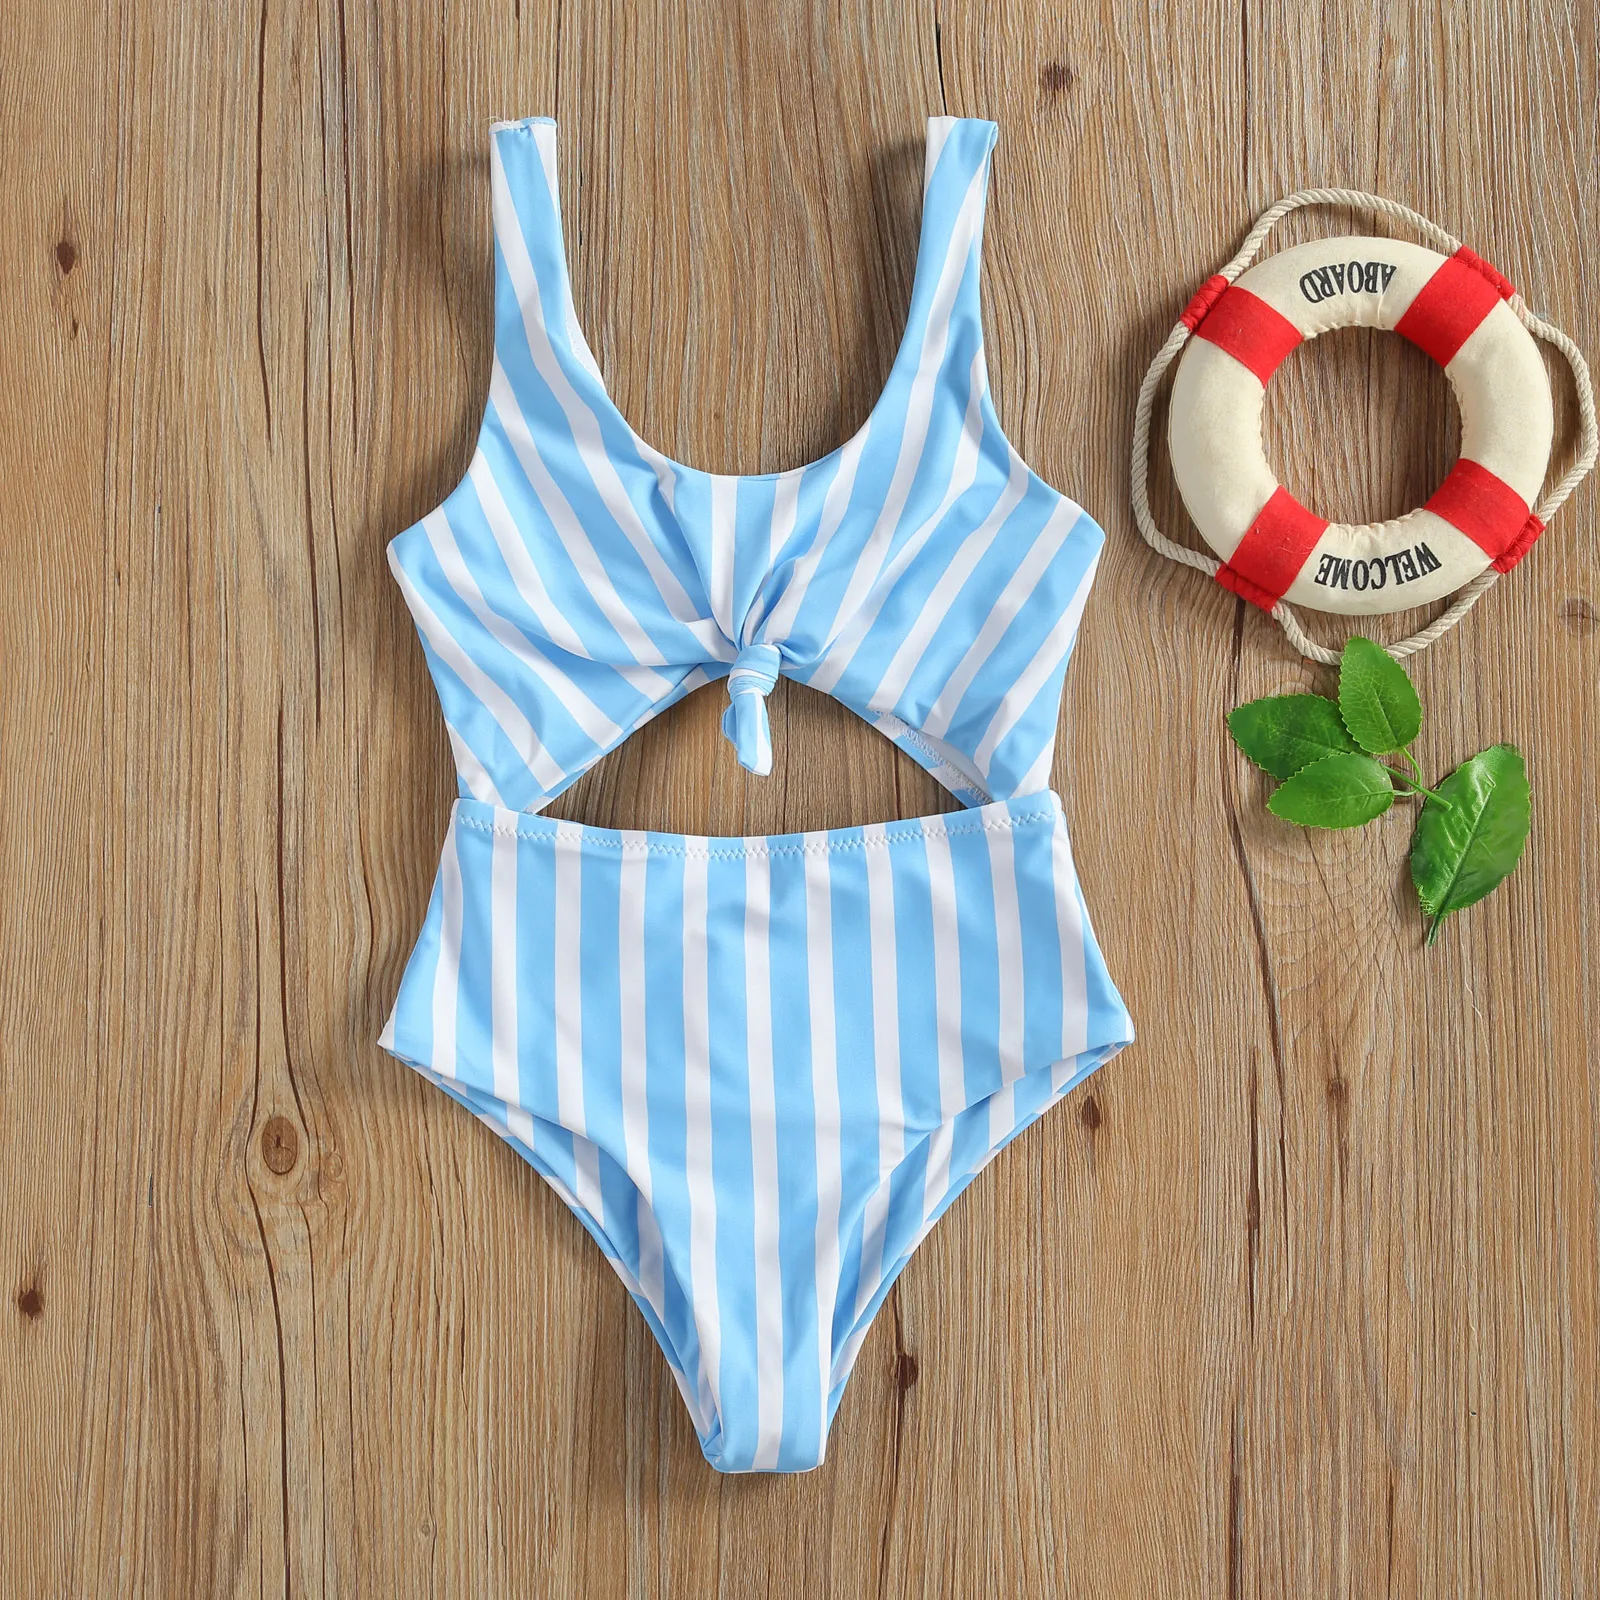 CCSDR Little Girls Fruit Print Striped Bikini Infant Kids Baby Beach One Pieces Swimsuits Swimwear